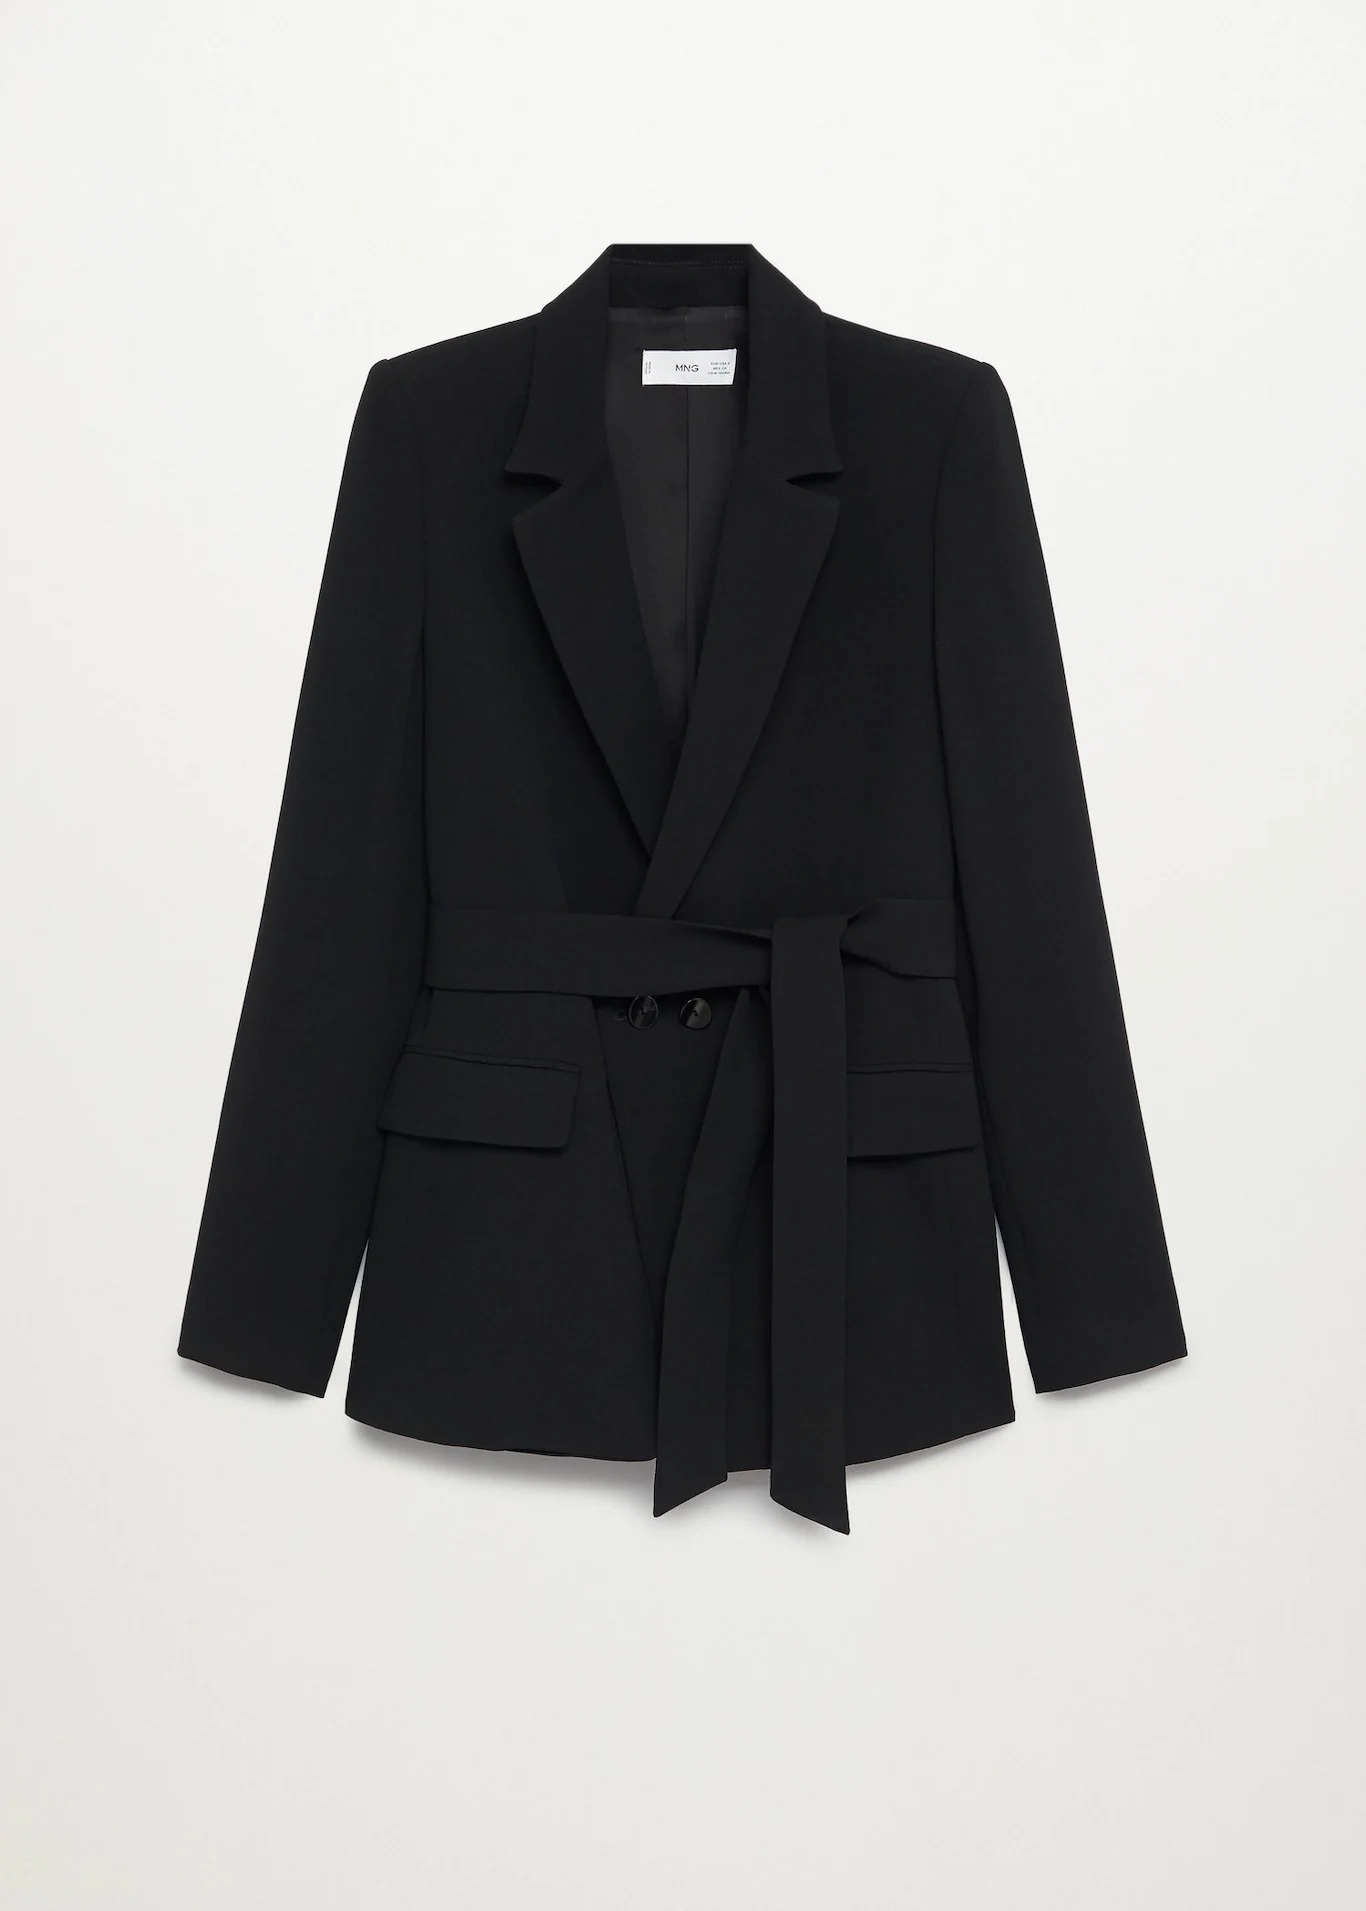 Mango 87064019 Crepe suit jacket with belt size S7